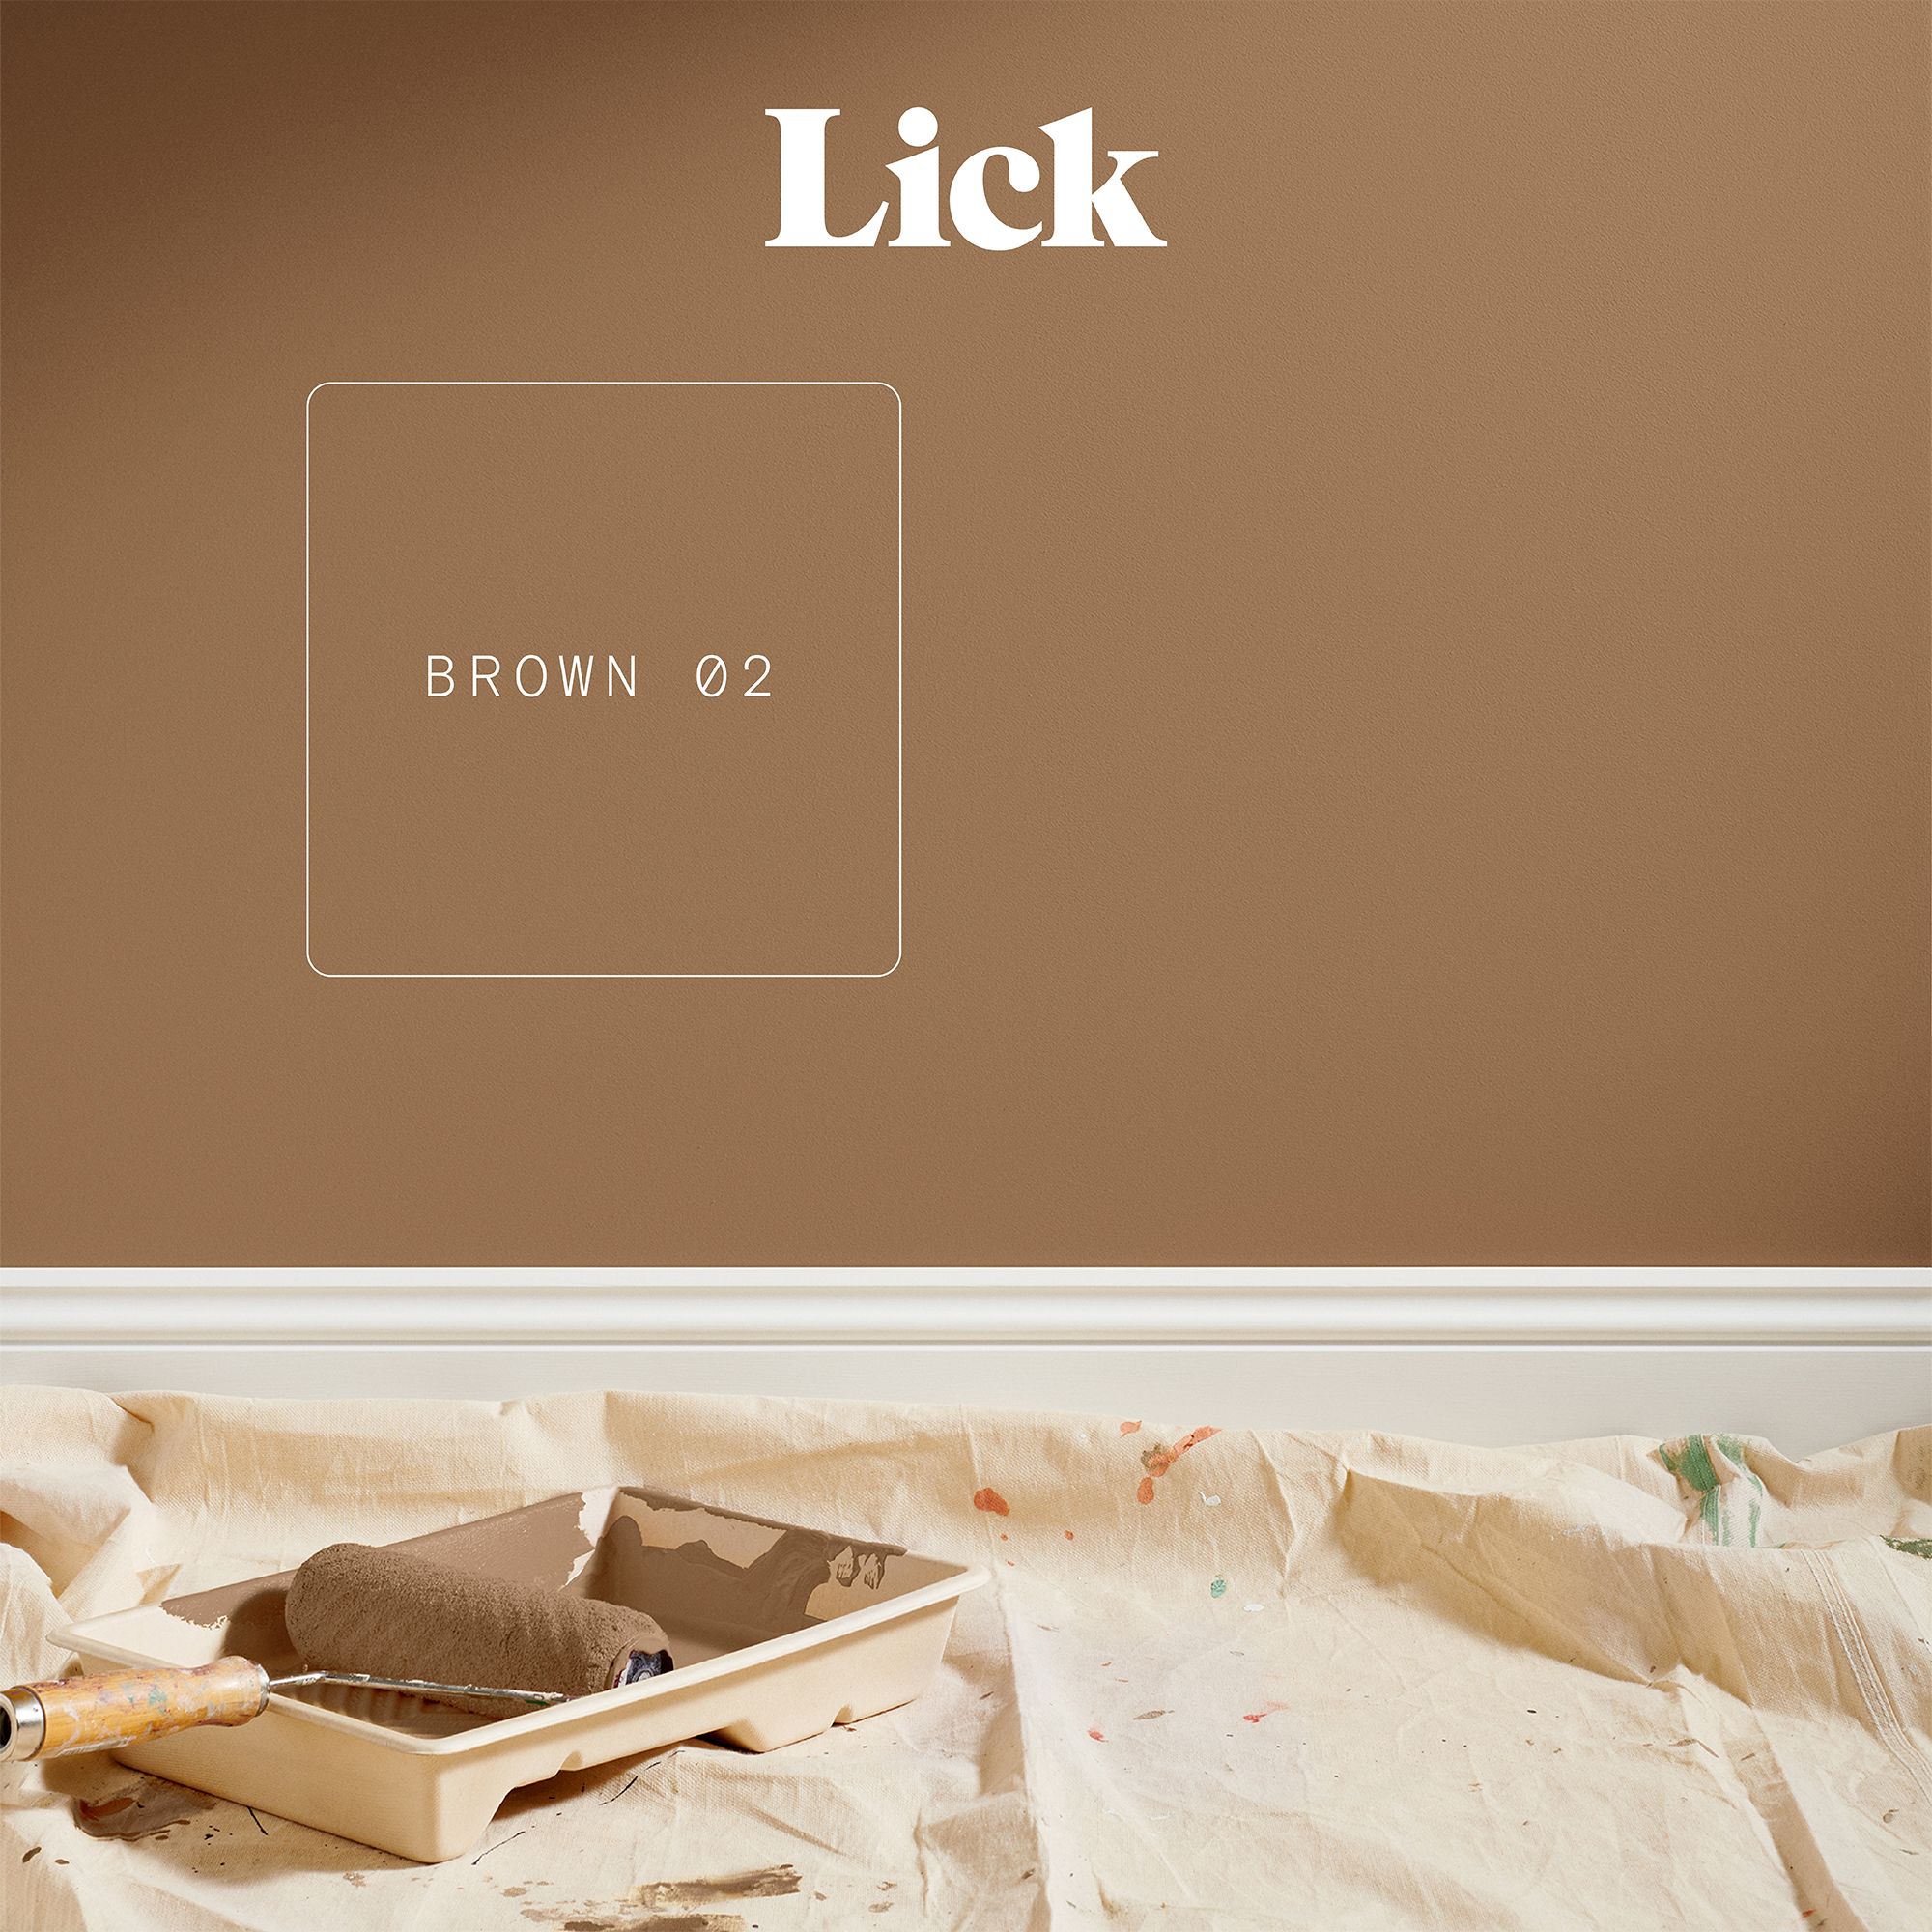 Lick Brown 02 Peel & stick Tester